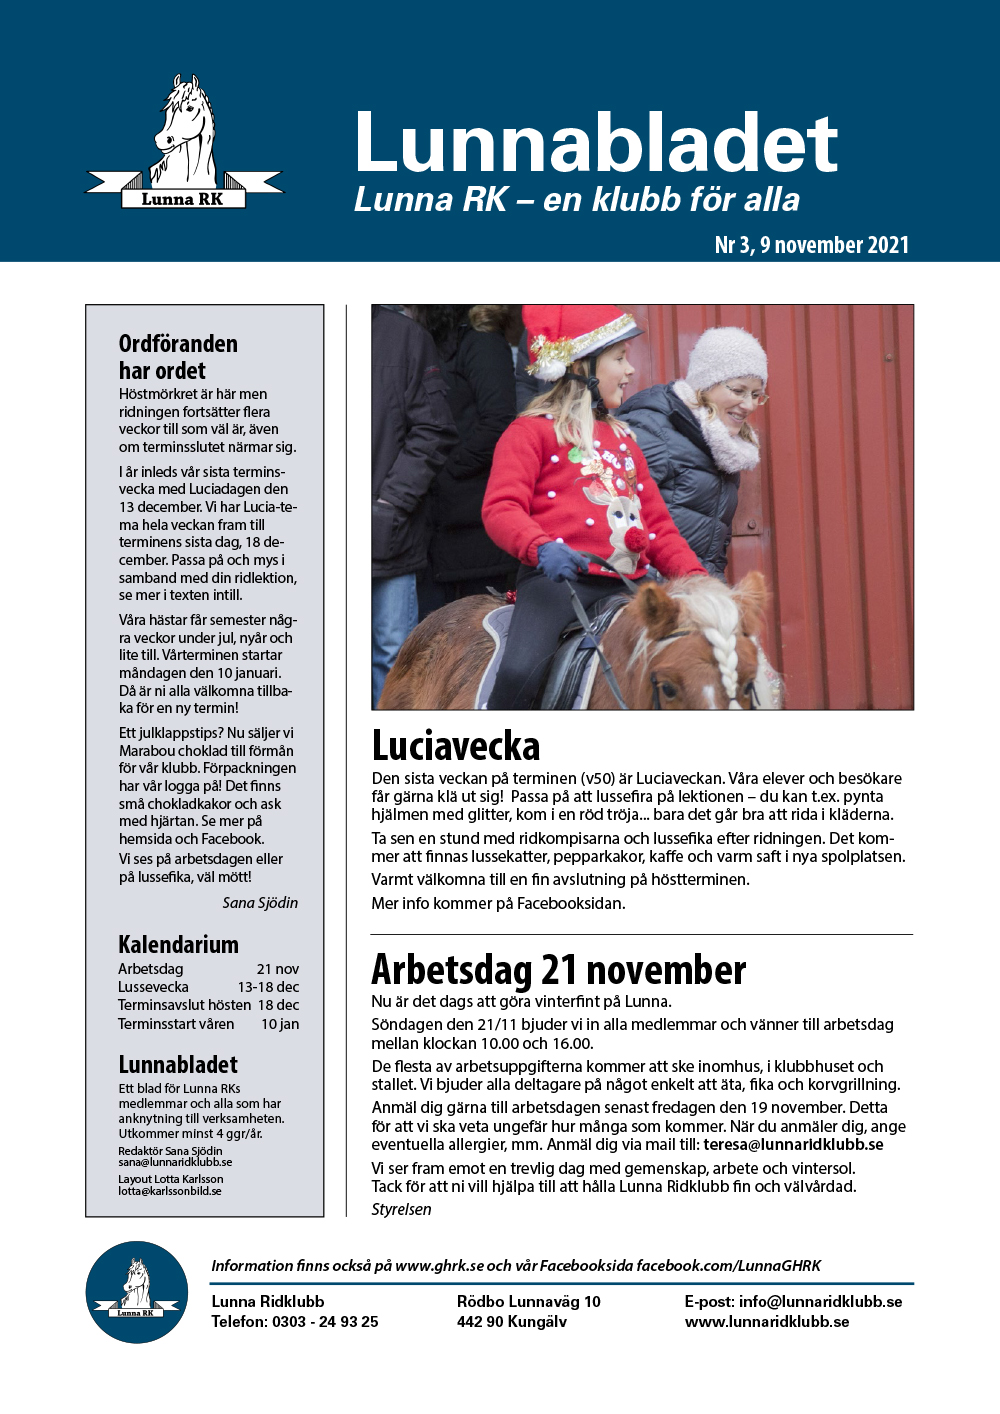 Lunnabladet, info för Lunna Ridklubb